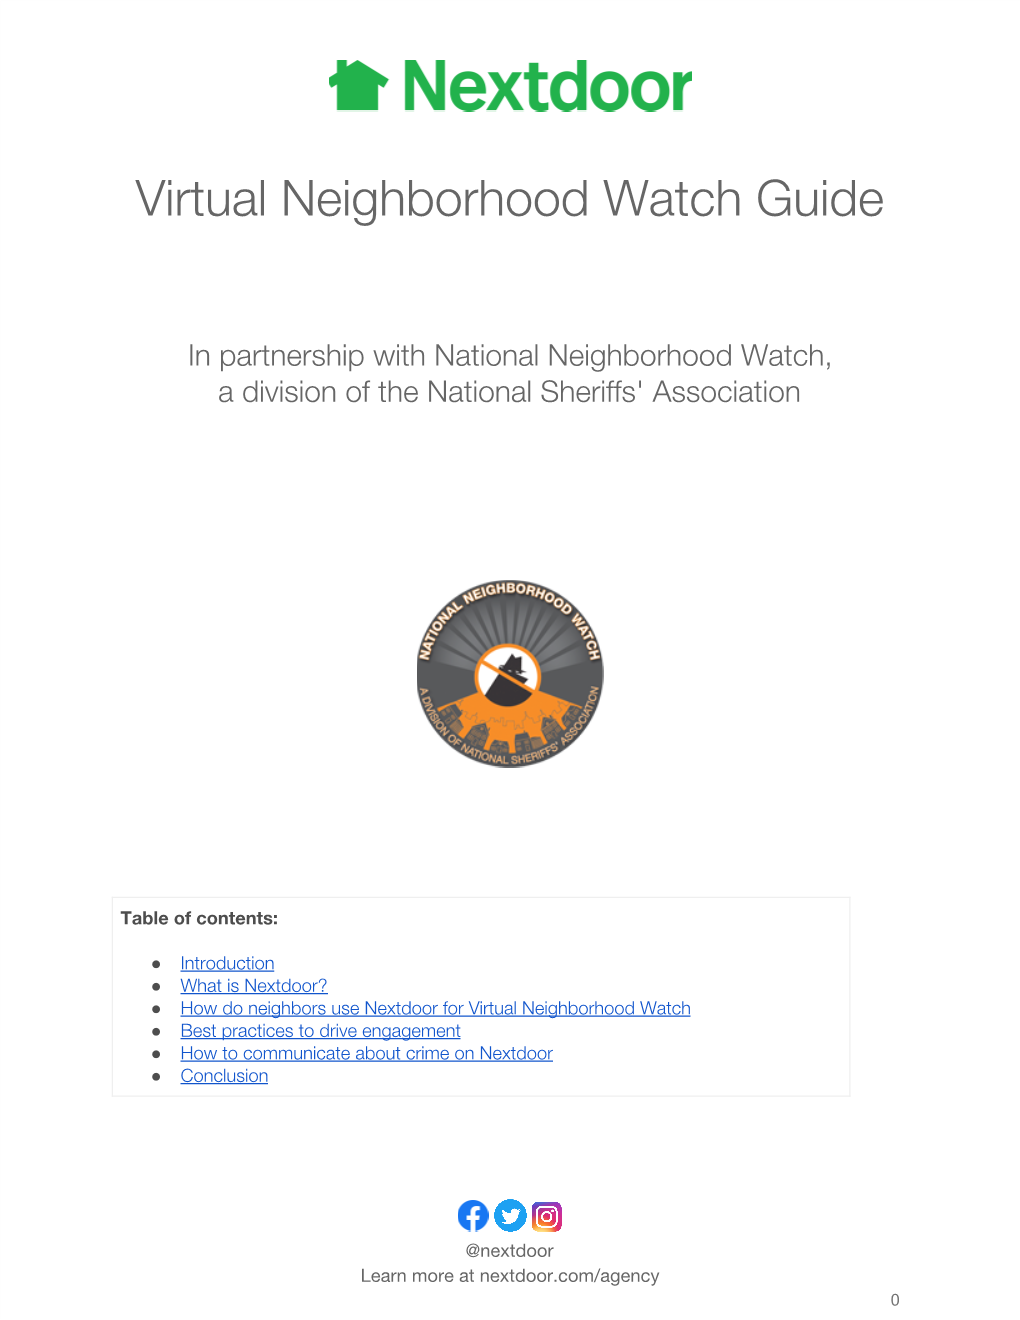 Nextdoor Virtual Neighborhood Watch Guide